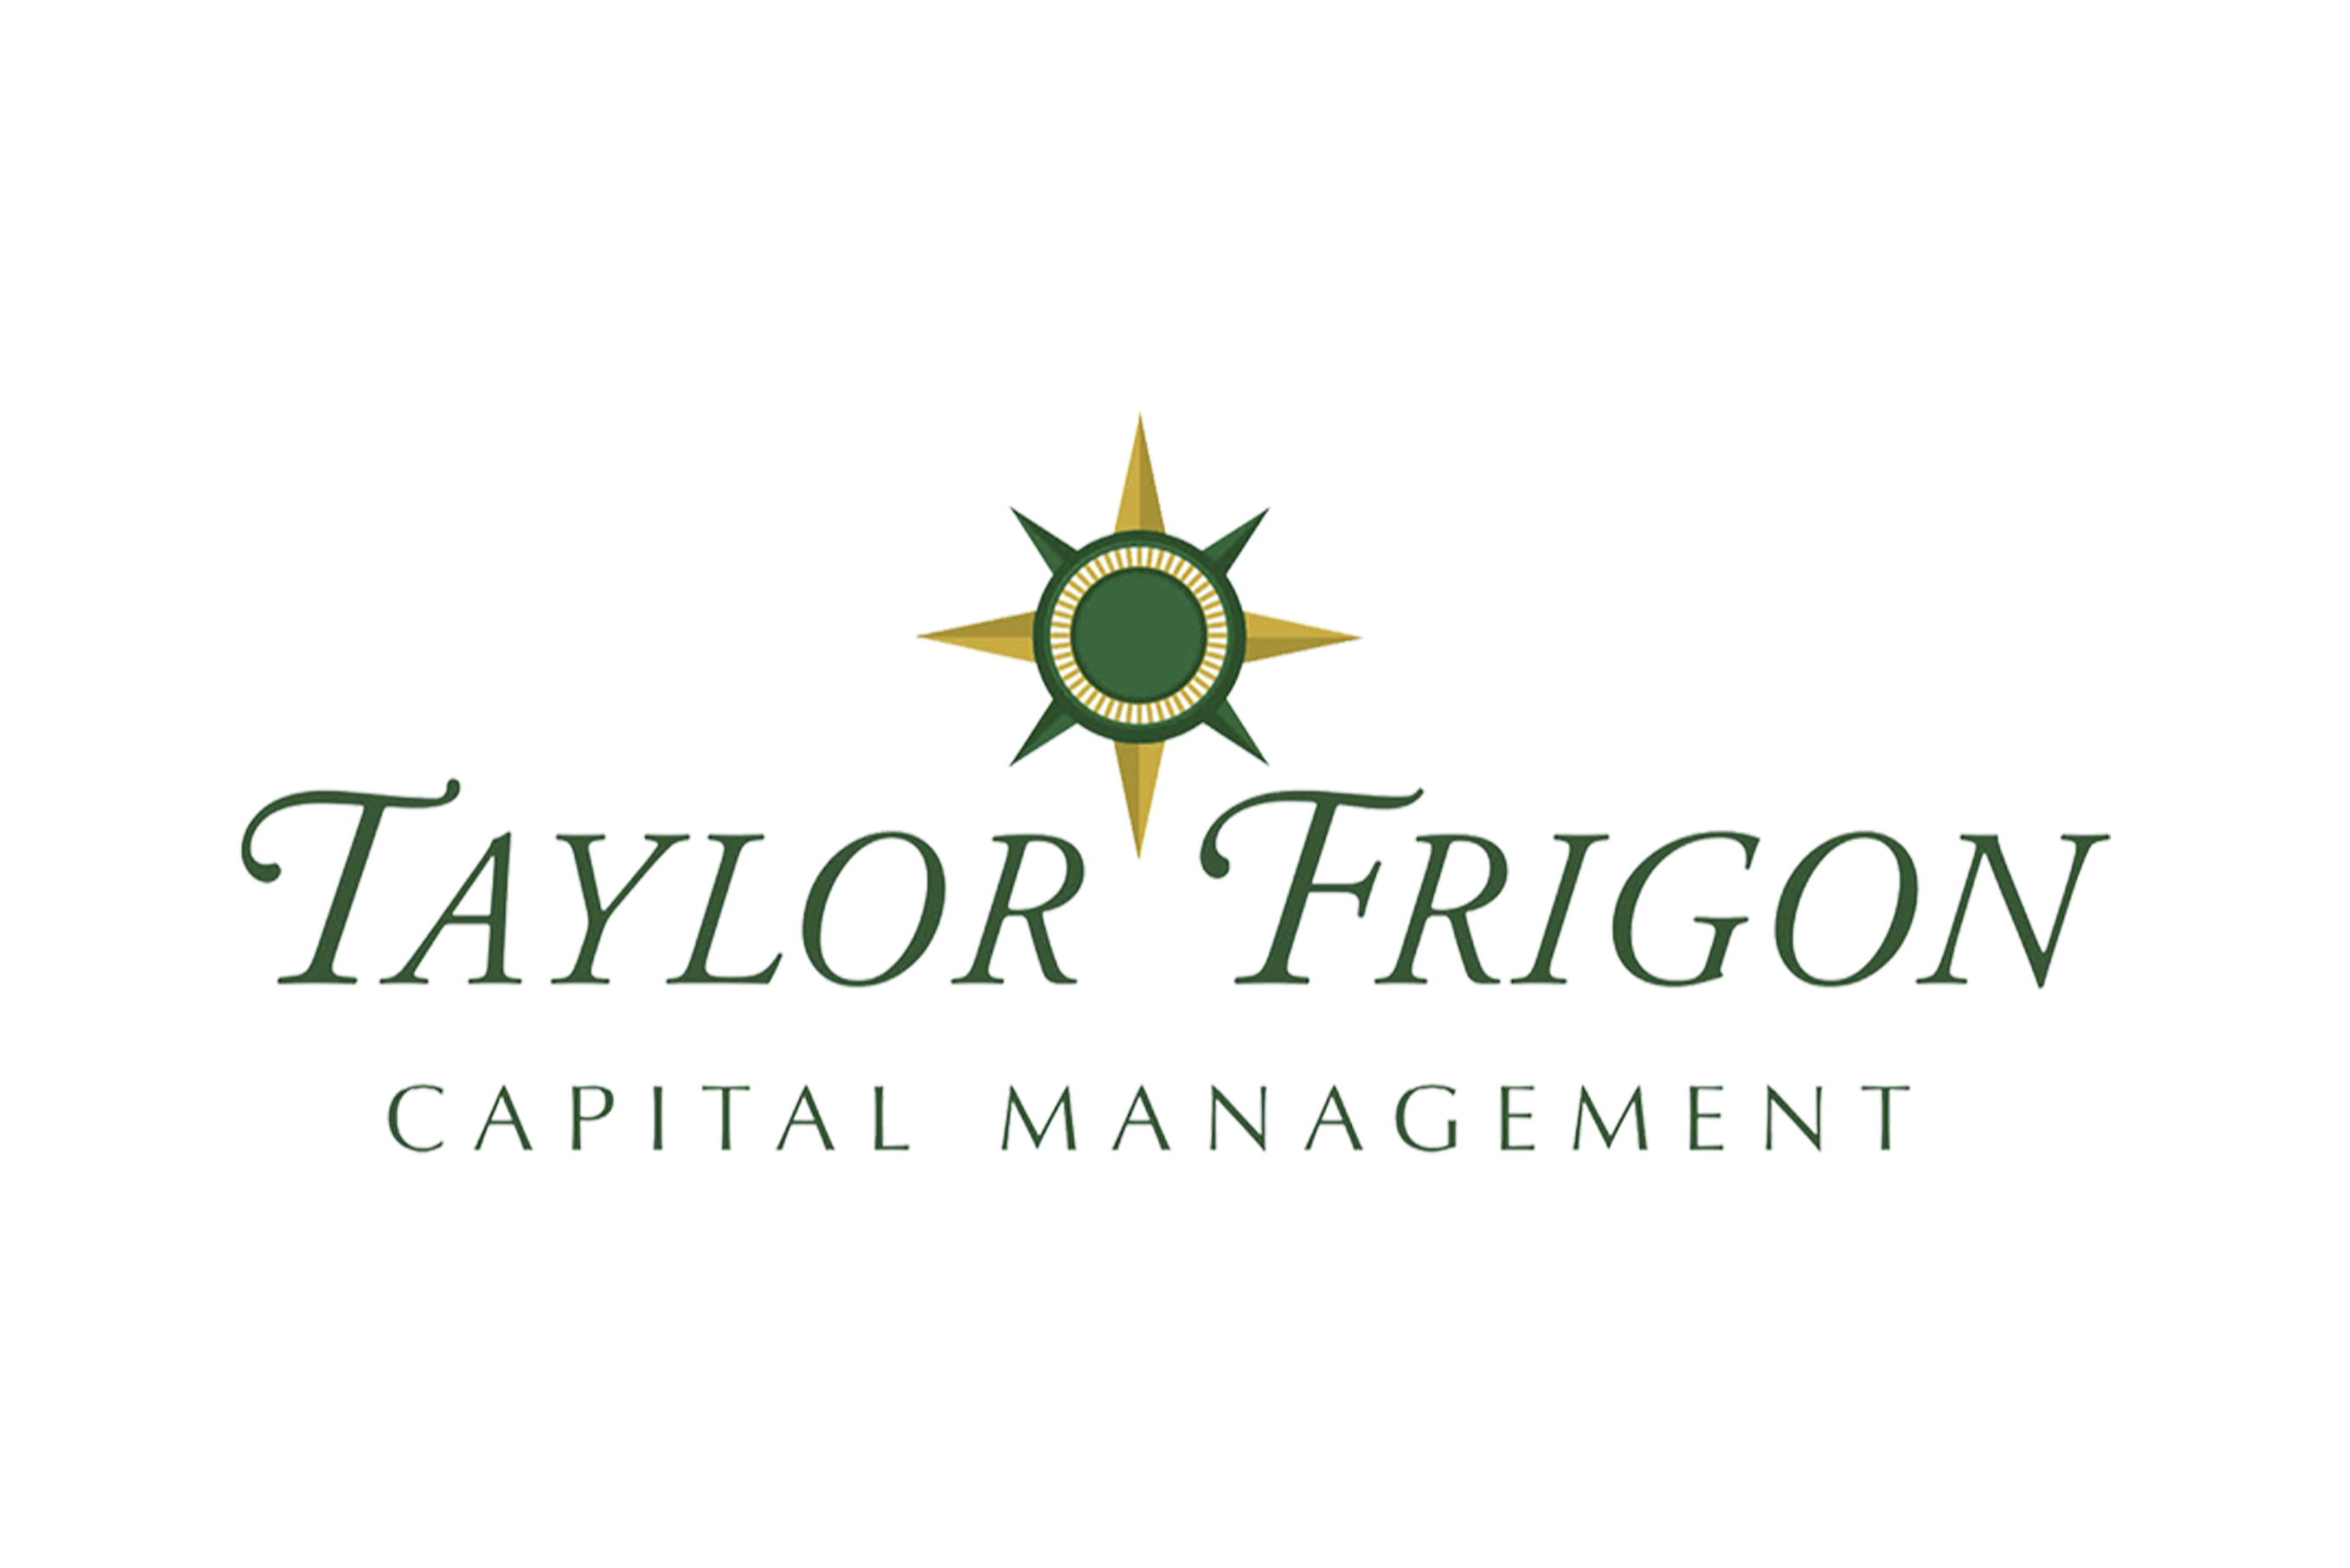 Taylor Frigon Capital Management